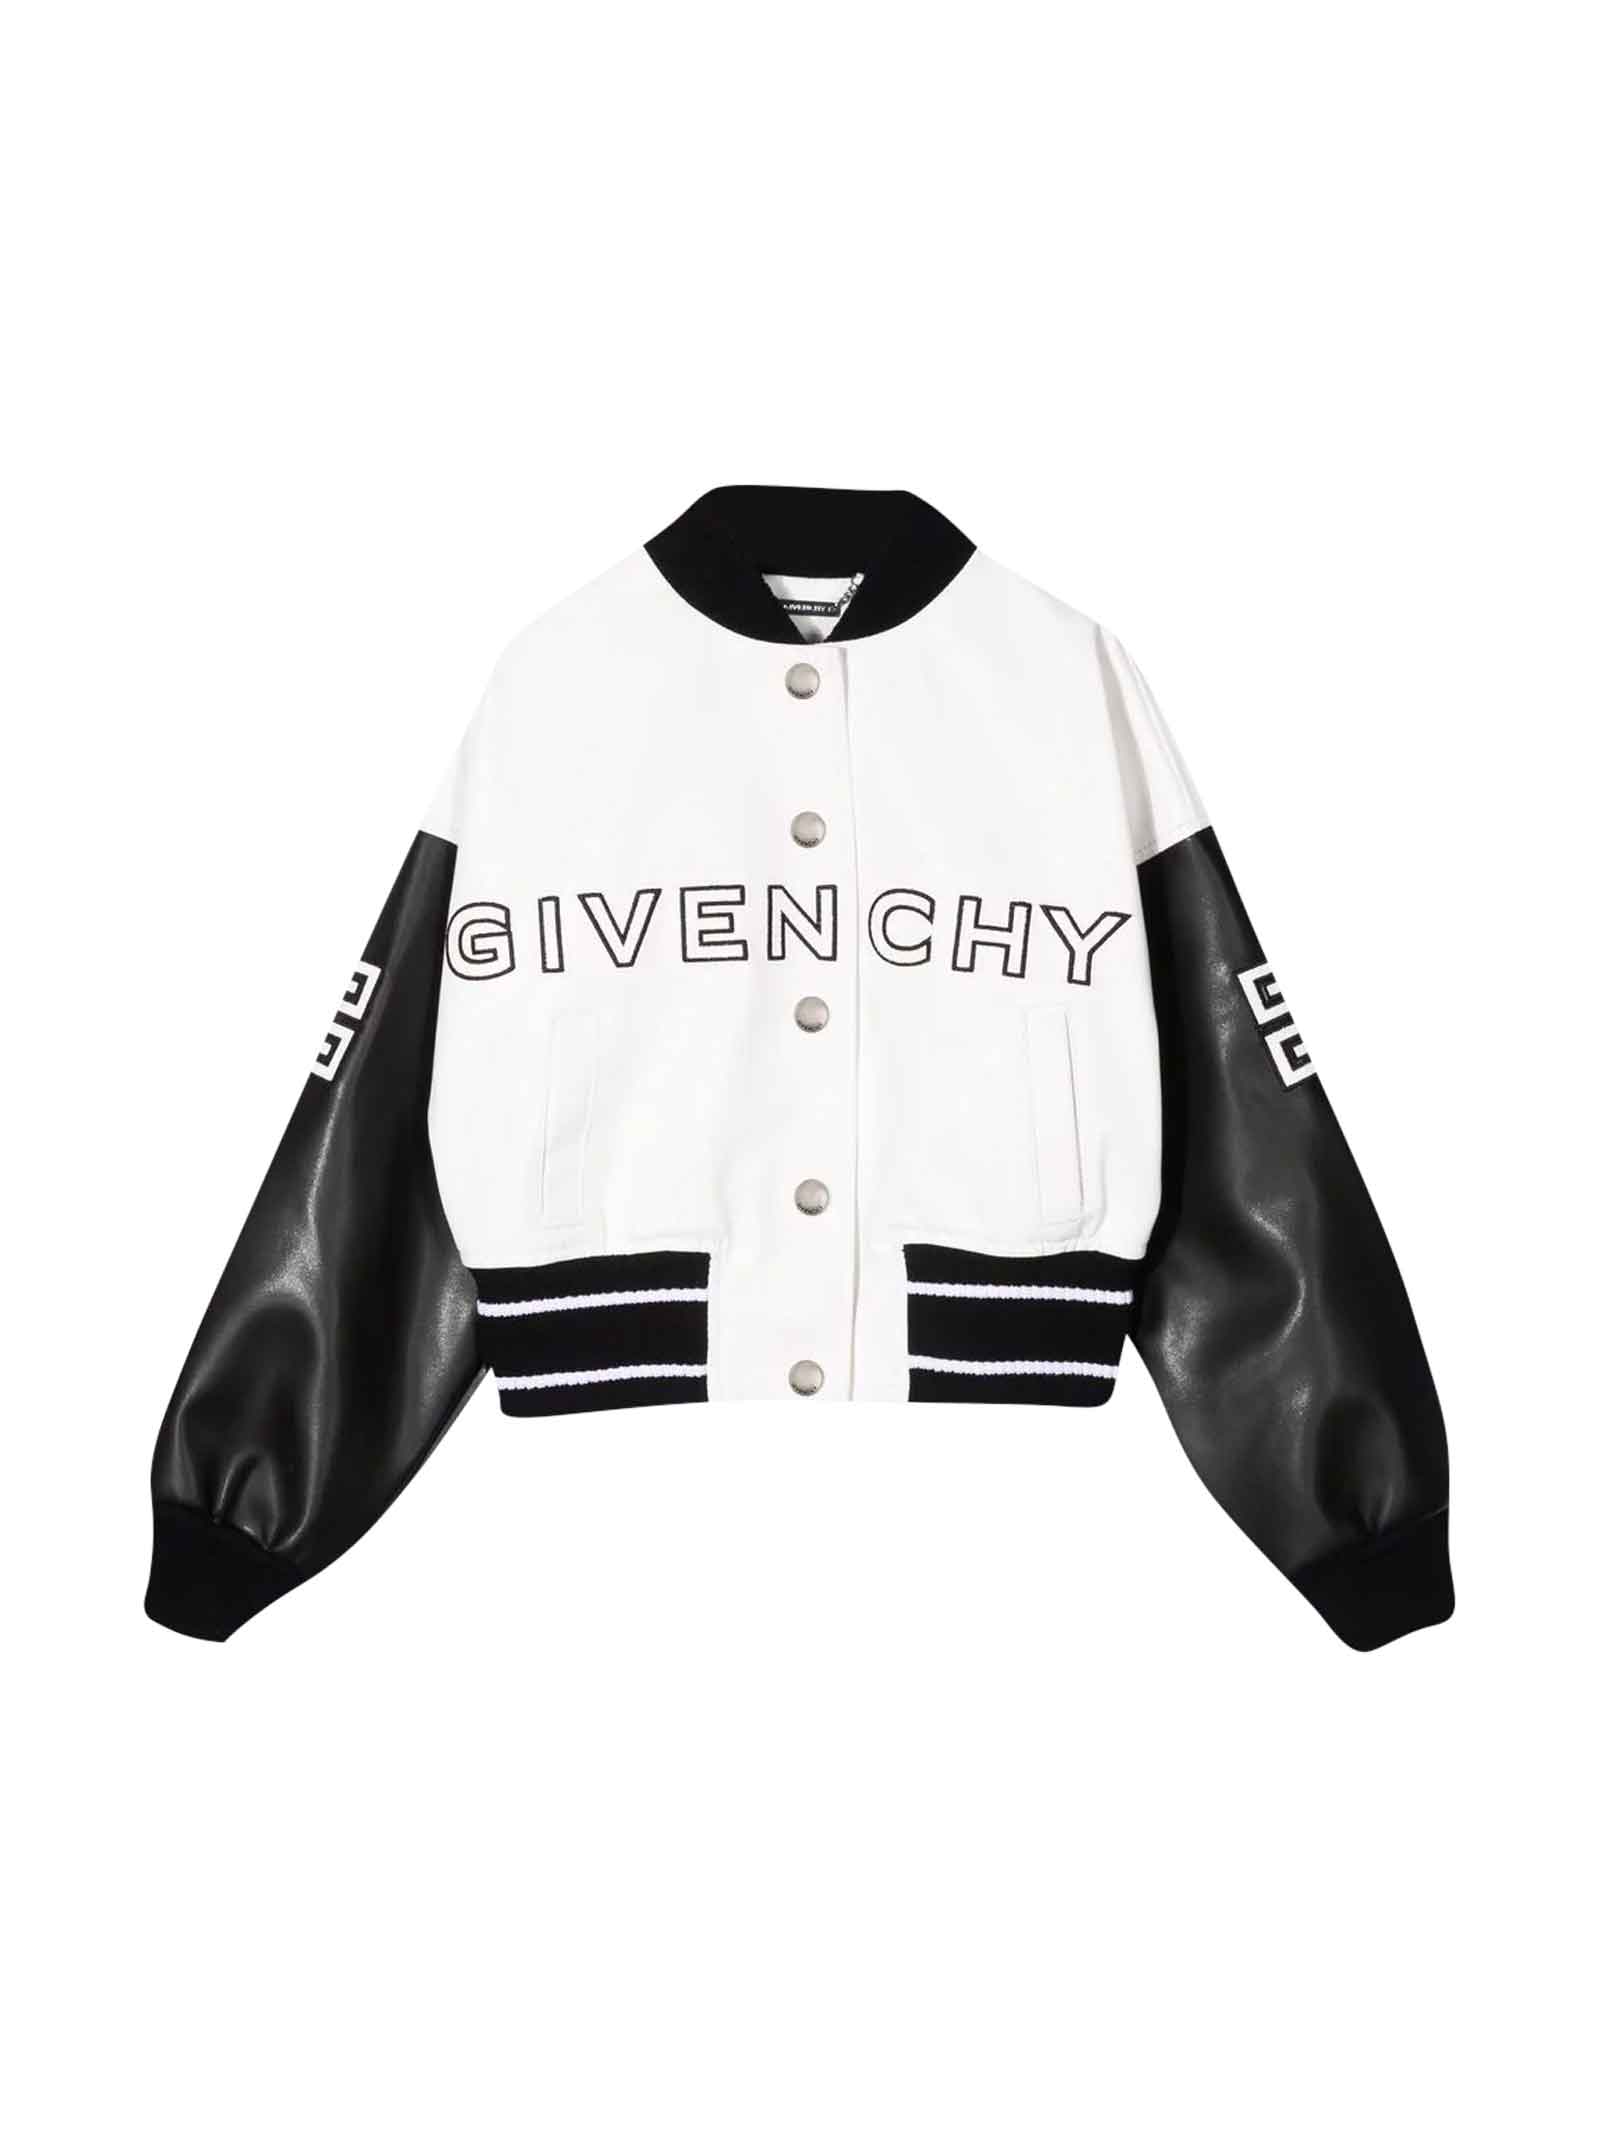 Givenchy Black And White Unisex Lightweight Jacket